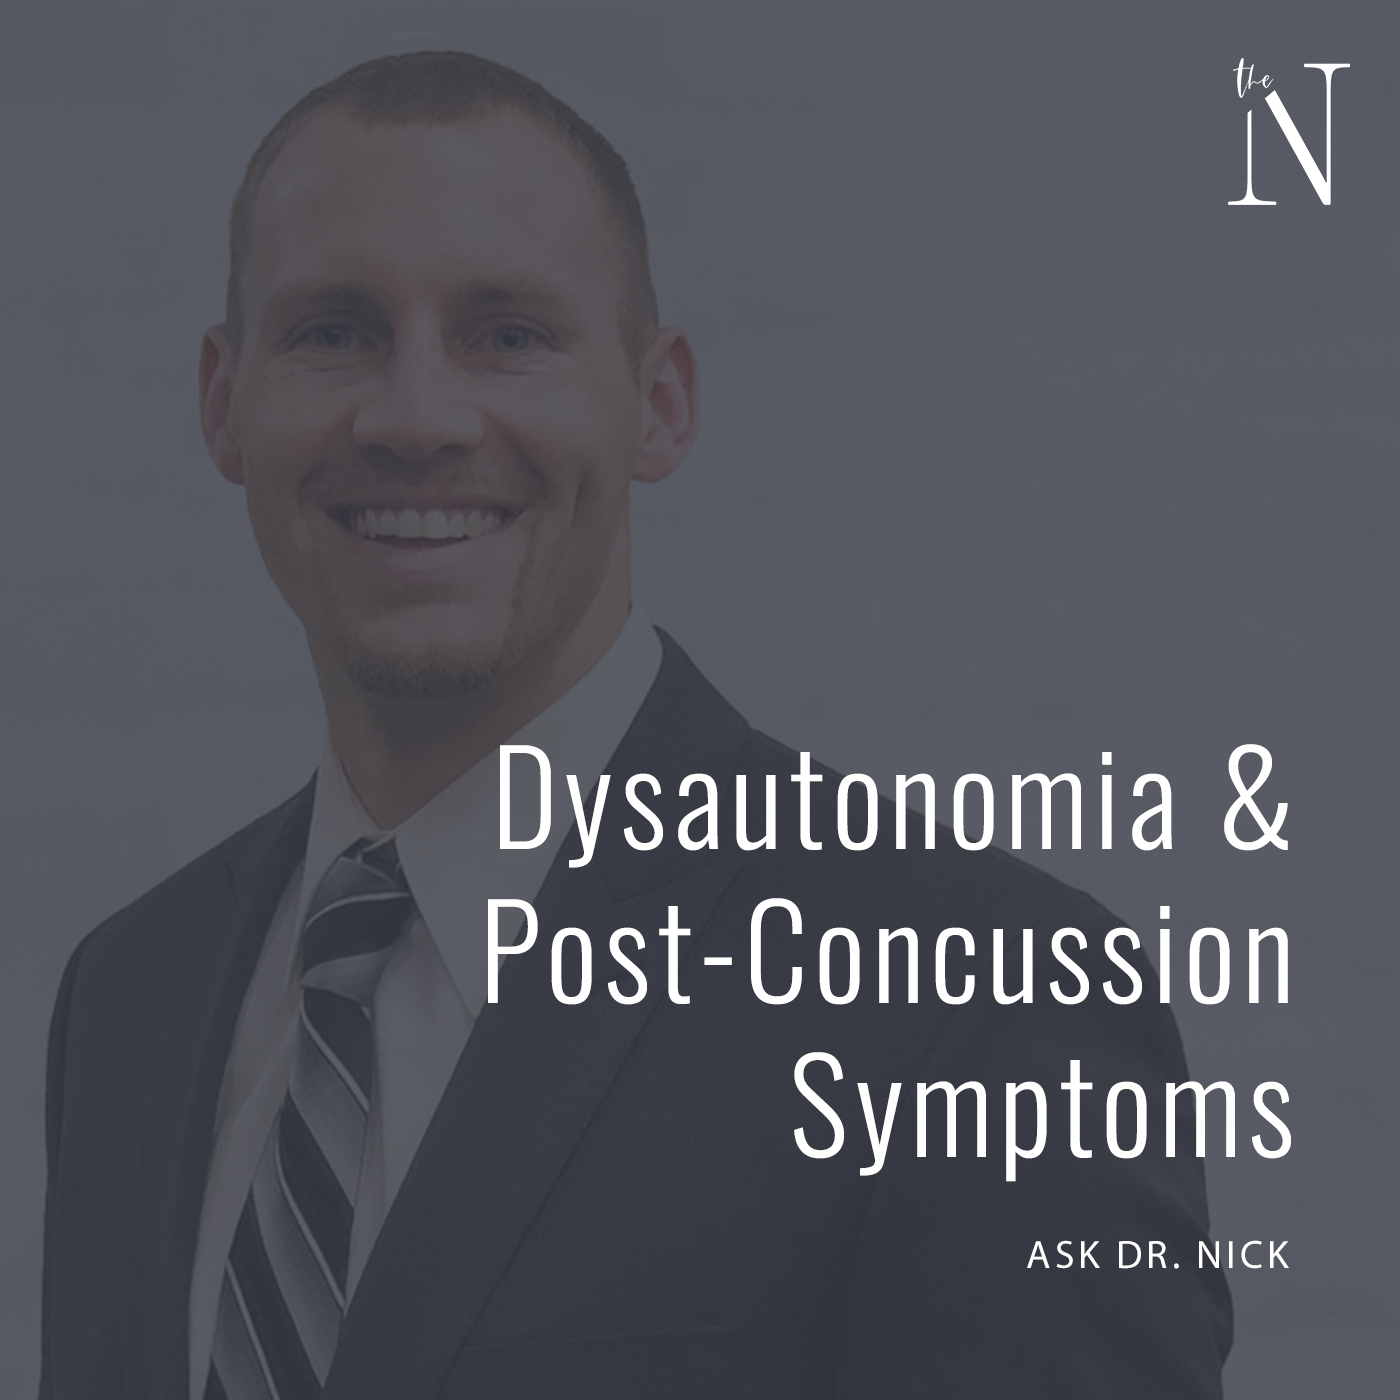 Post-Concussion Symptoms